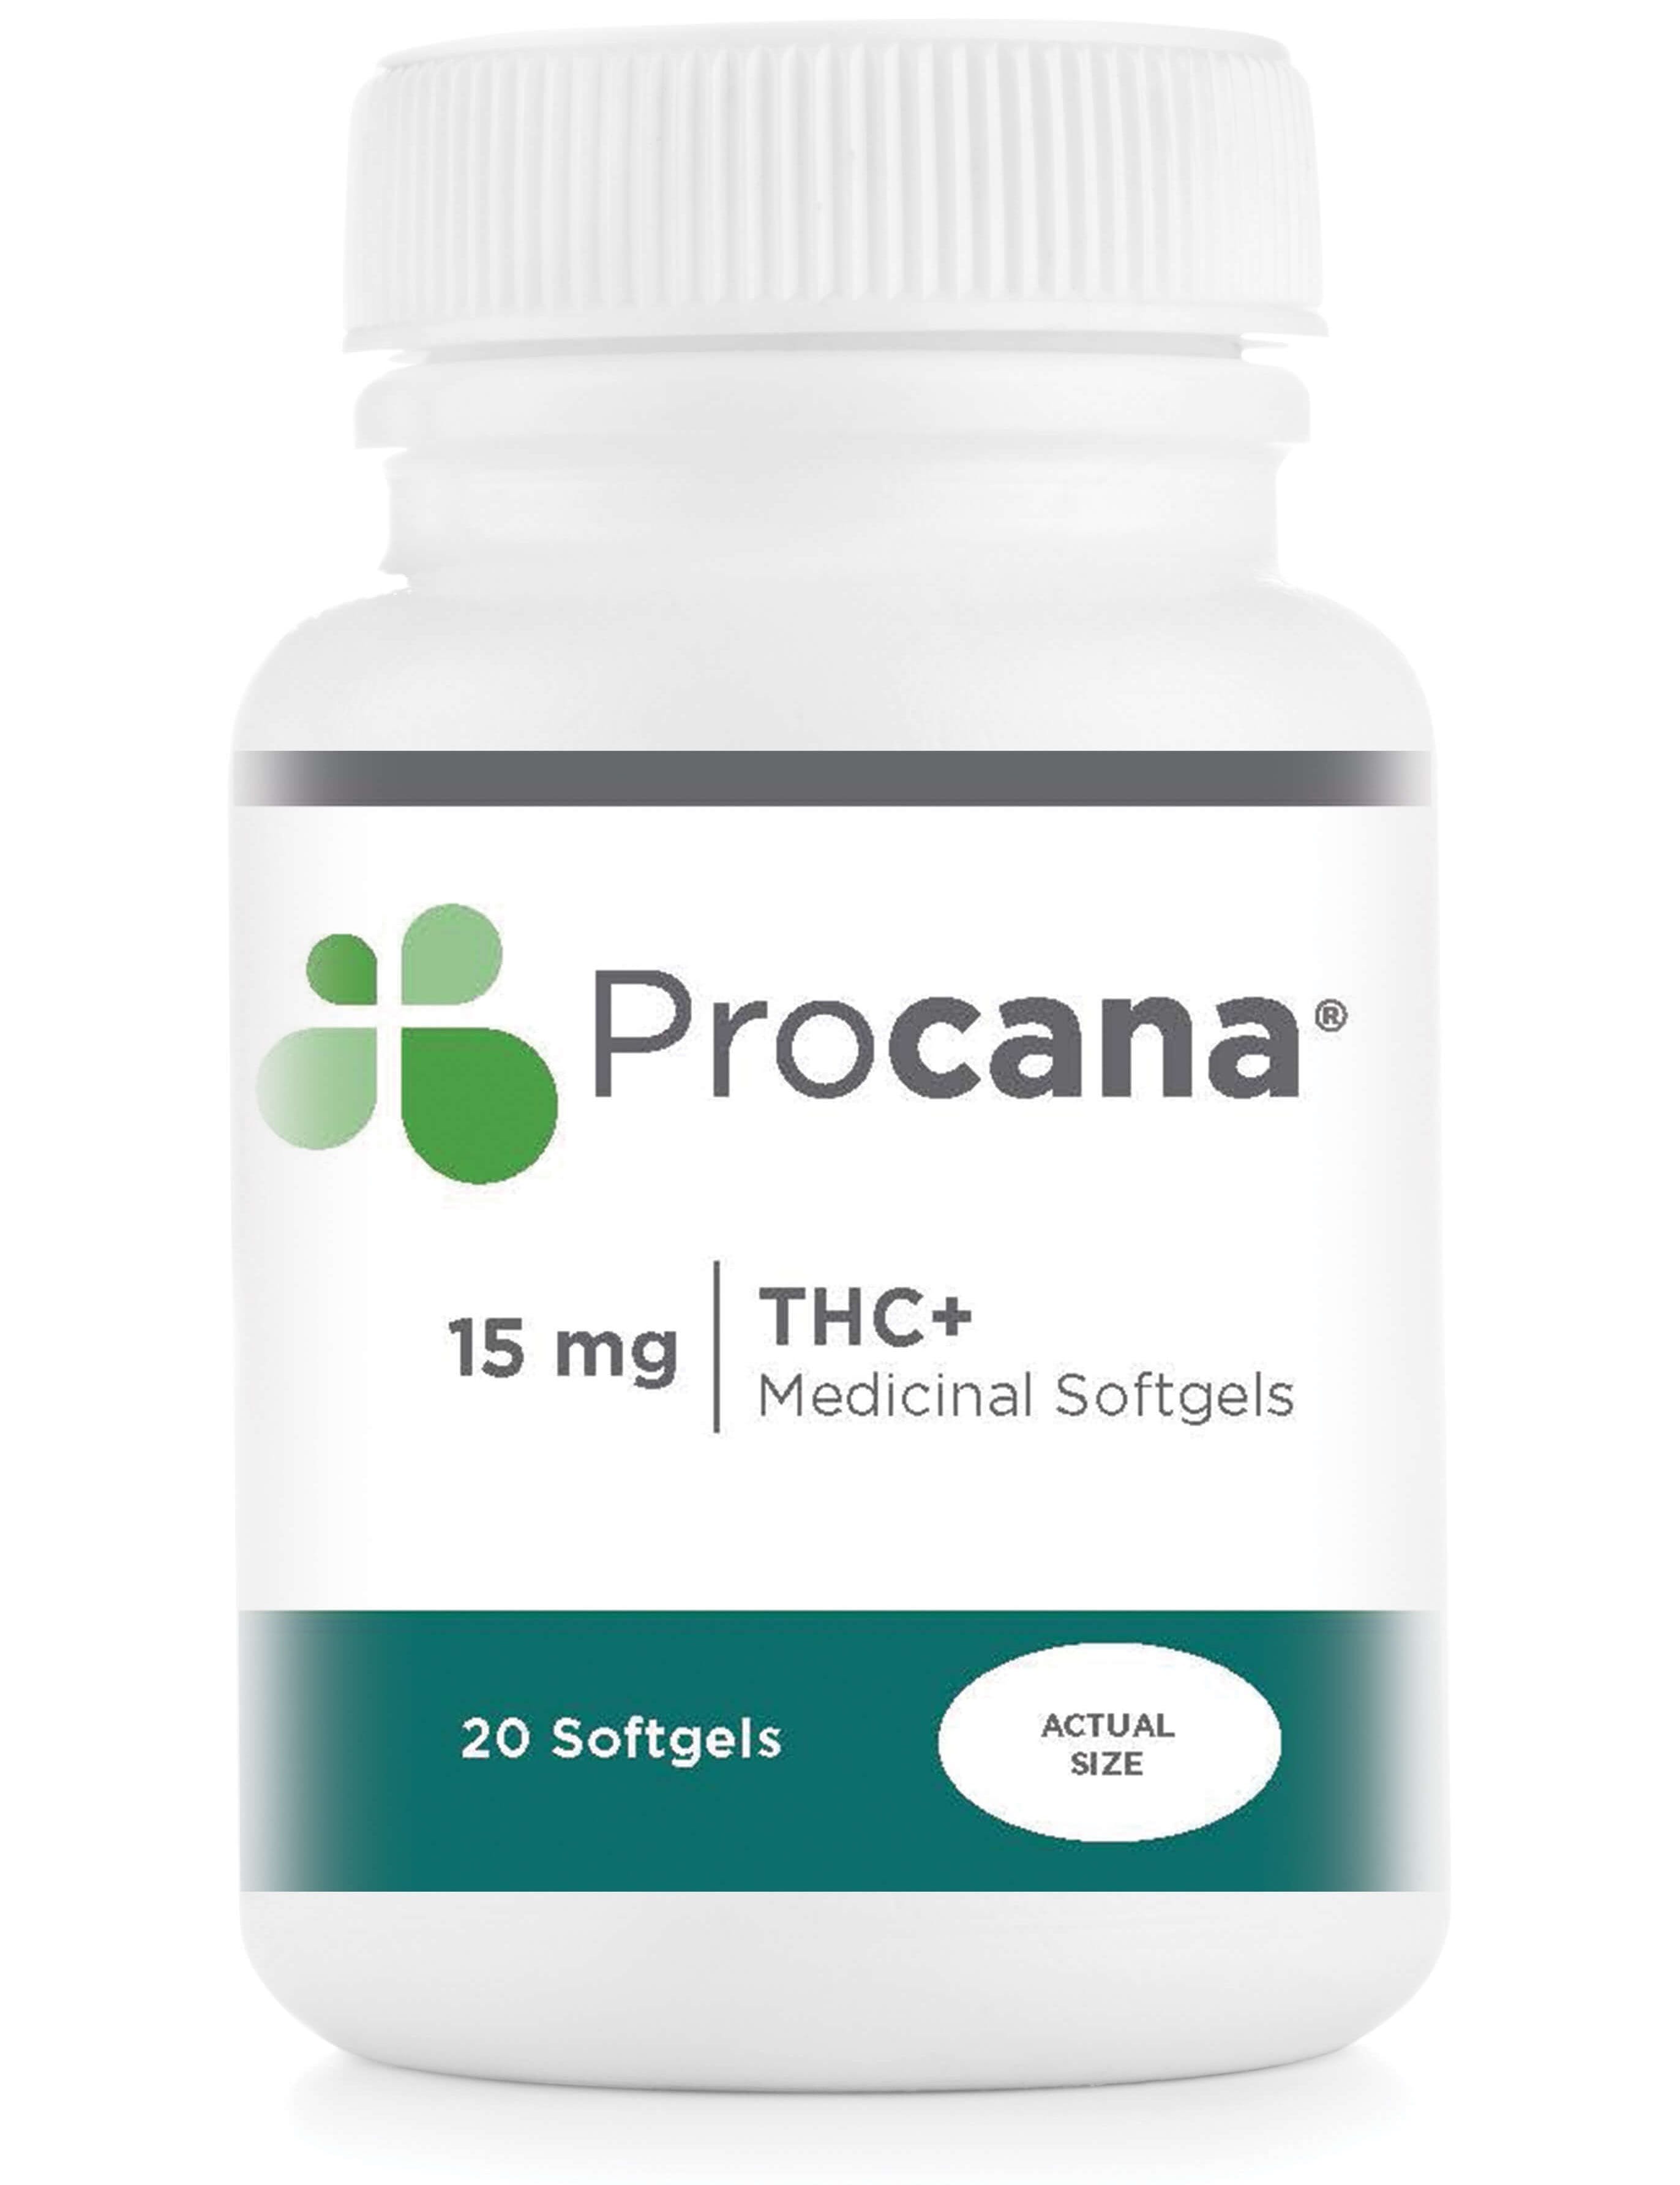 marijuana-dispensaries-mendocino-organics-in-vallejo-procana-softgels-thc-2b-15mg